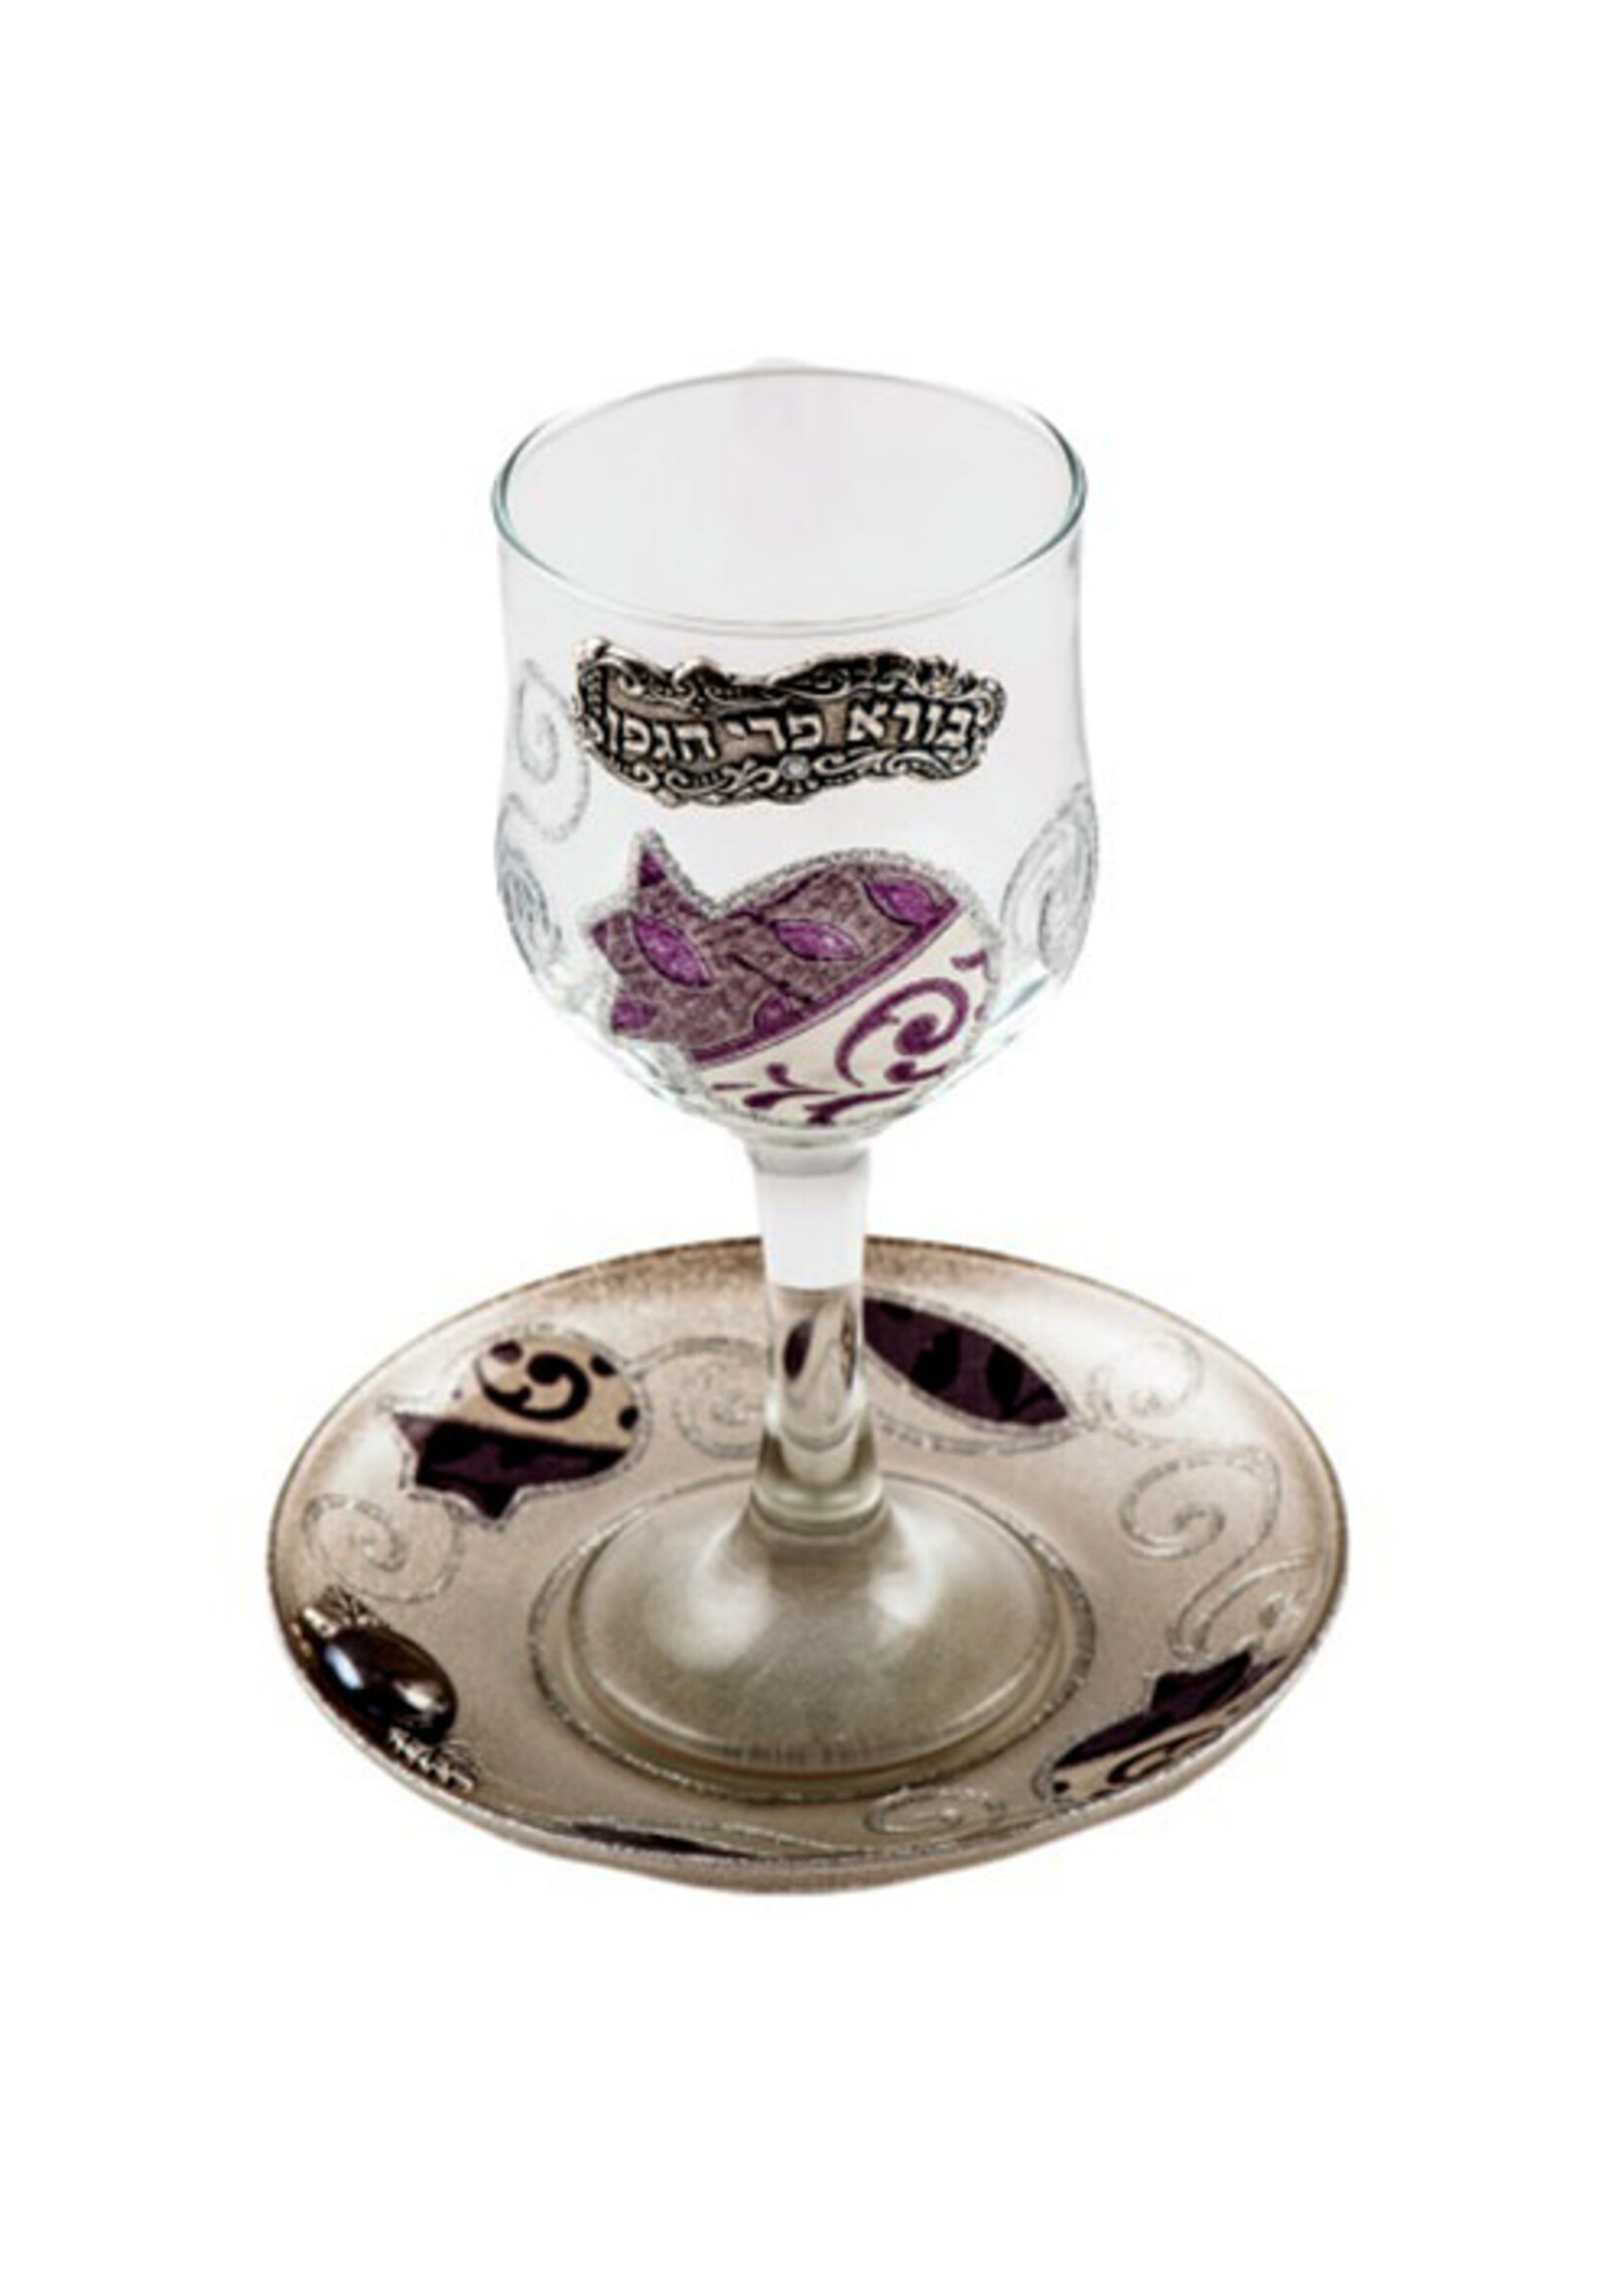 KIDDUSH CUP GLASS WITH ARTISTIC PURPLE  POM 500601-60